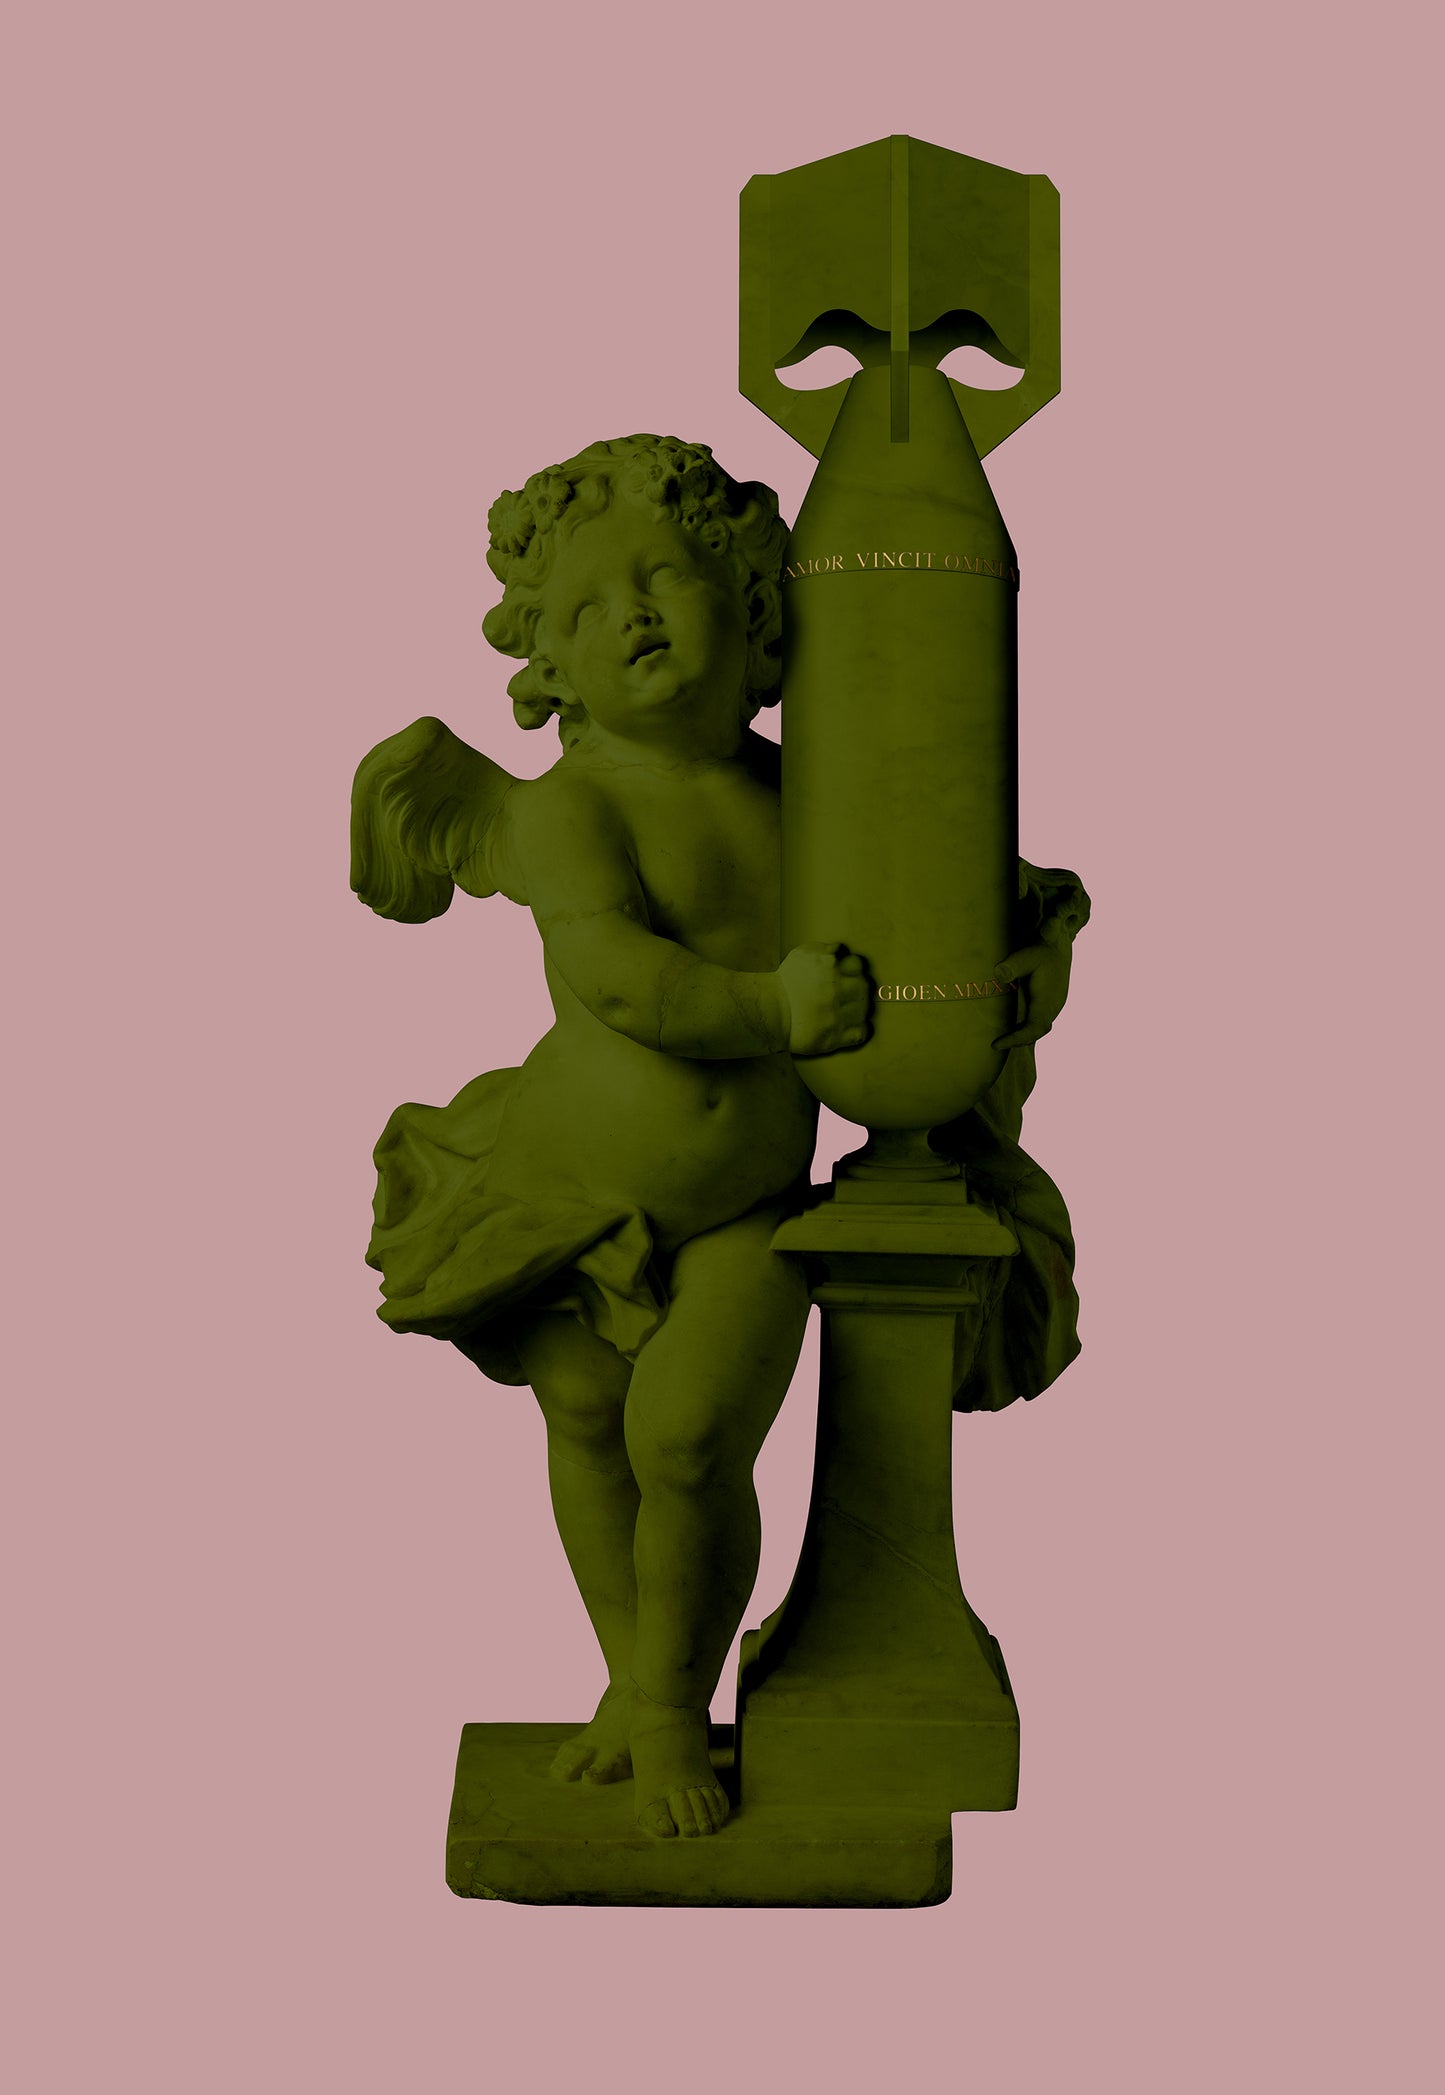 Cupid (Amor Vincit Omnia), by Magnus Gjoen